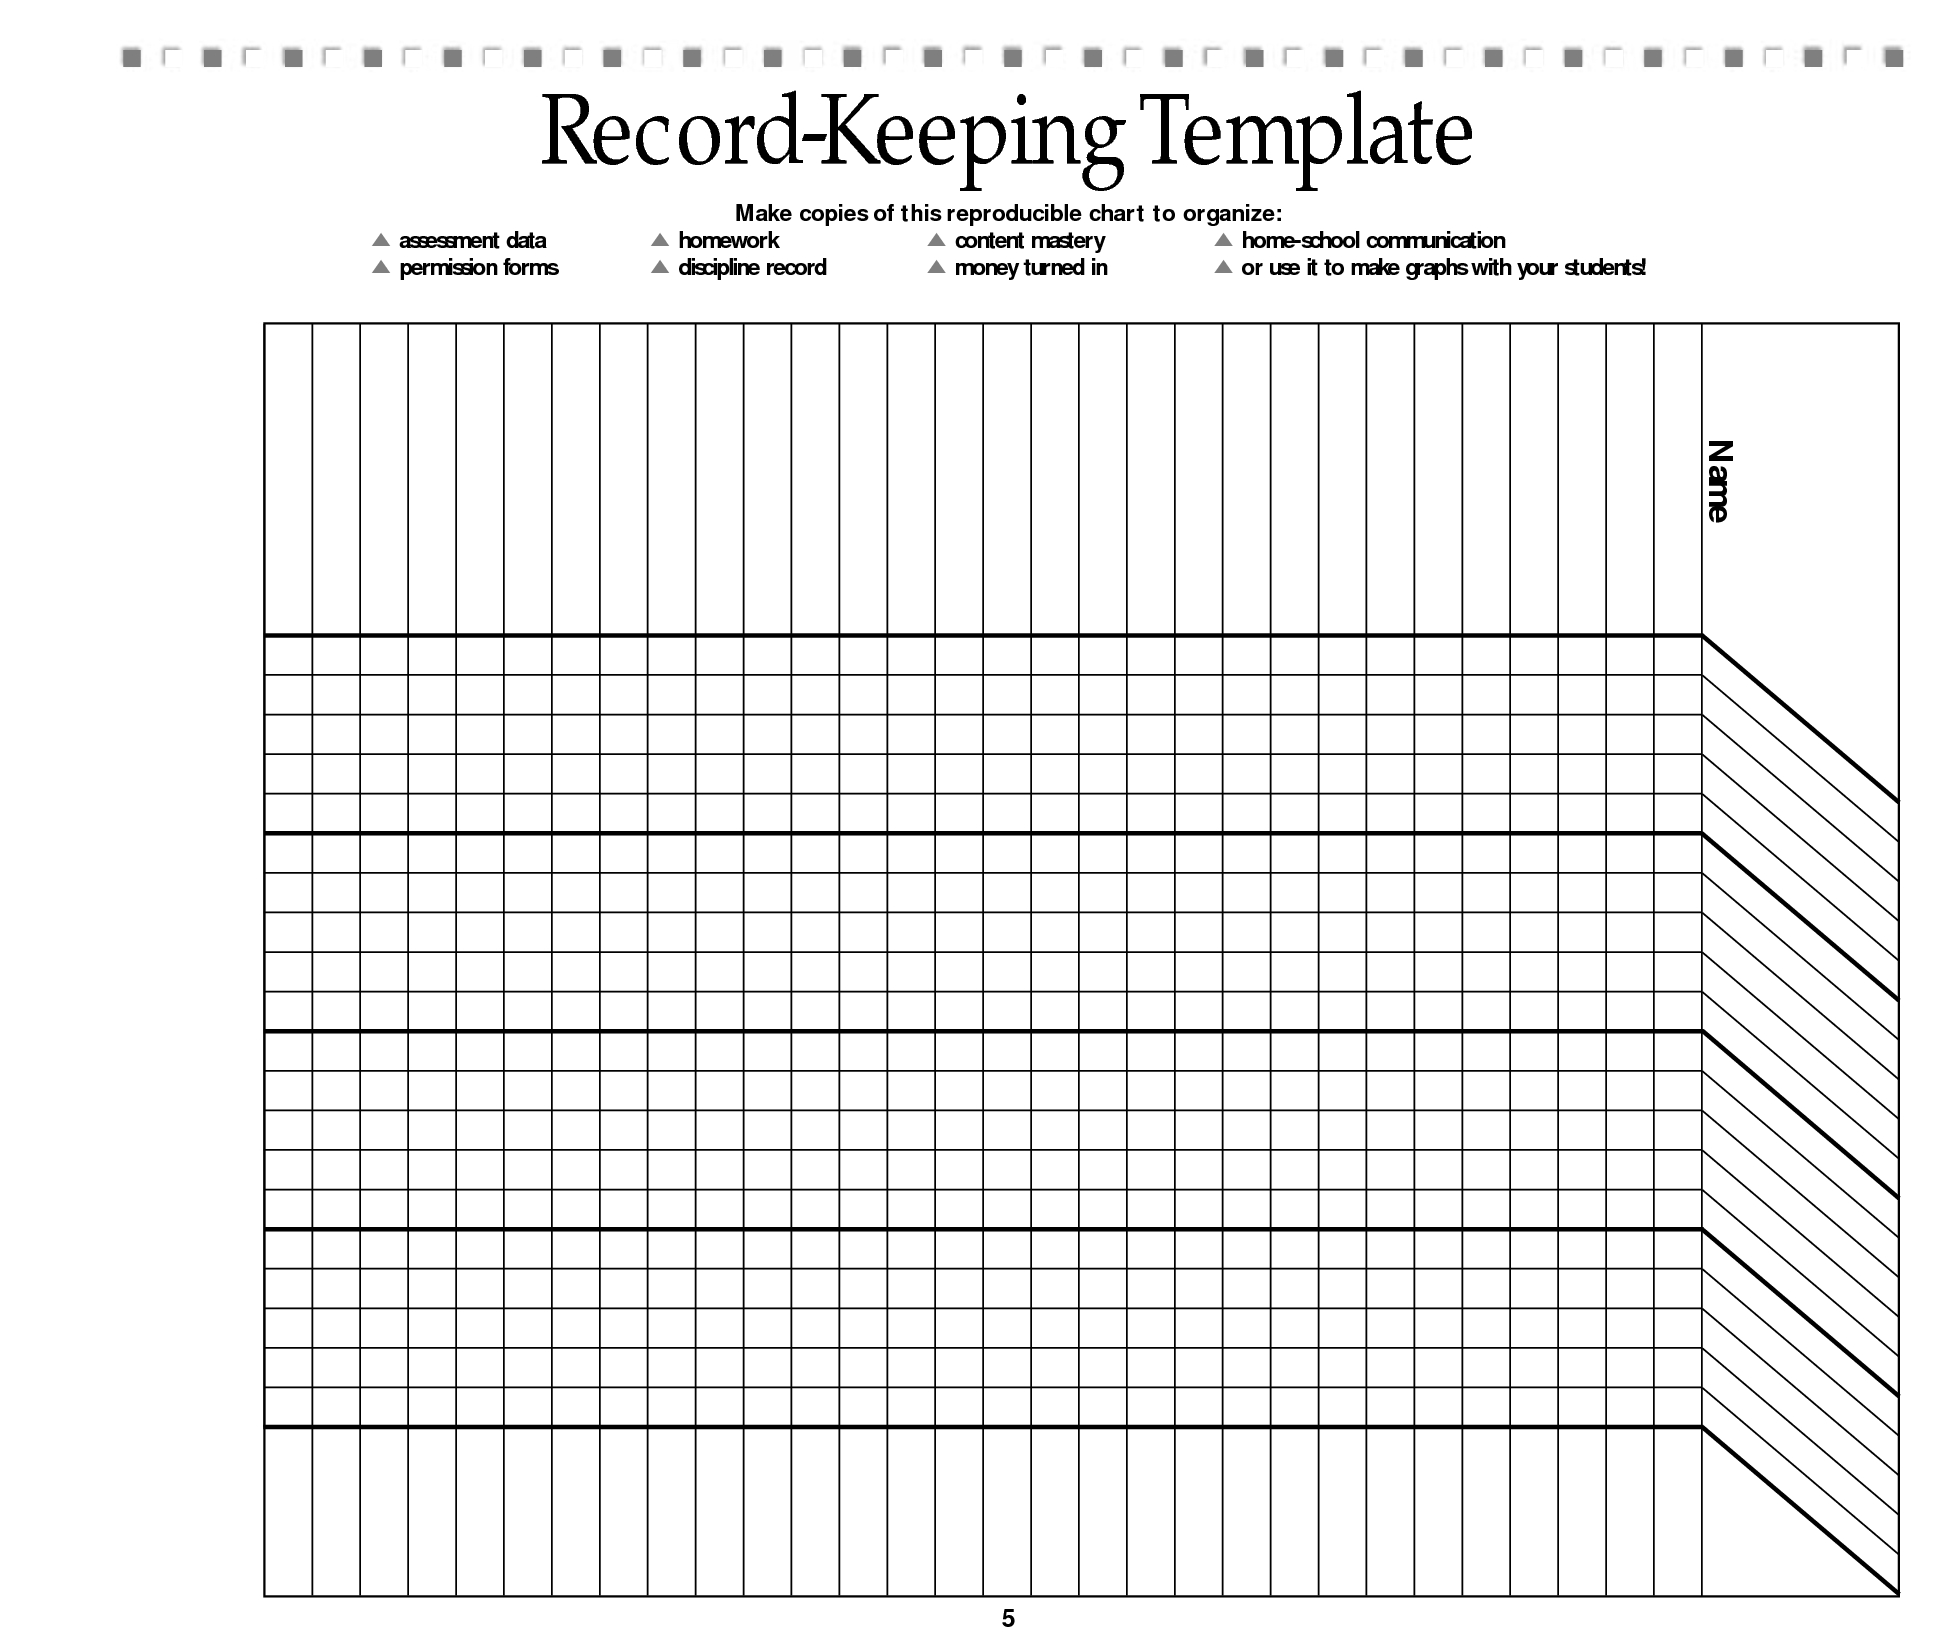 Free Printable Record Keeping Forms | Back To School | Pinterest - Free Printable Grade Sheet